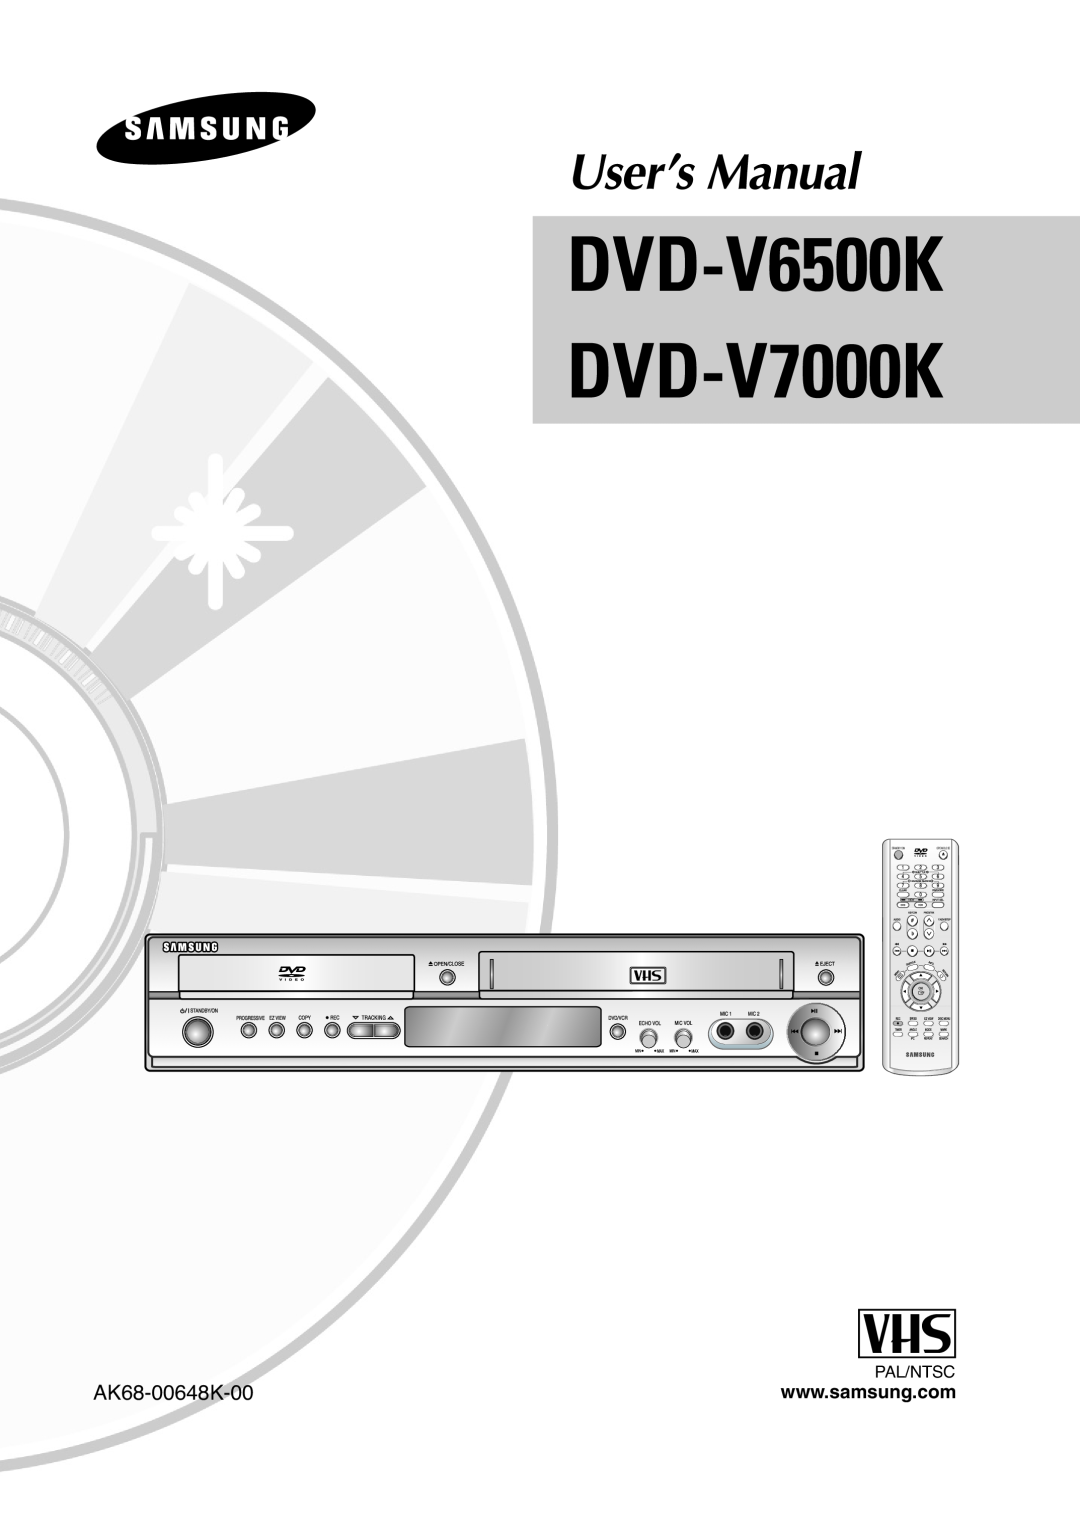 Samsung user manual AK68-00648K-00, DVD-V6500K DVD-V7000K, User’s Manual, Standby/Onopen/Close 